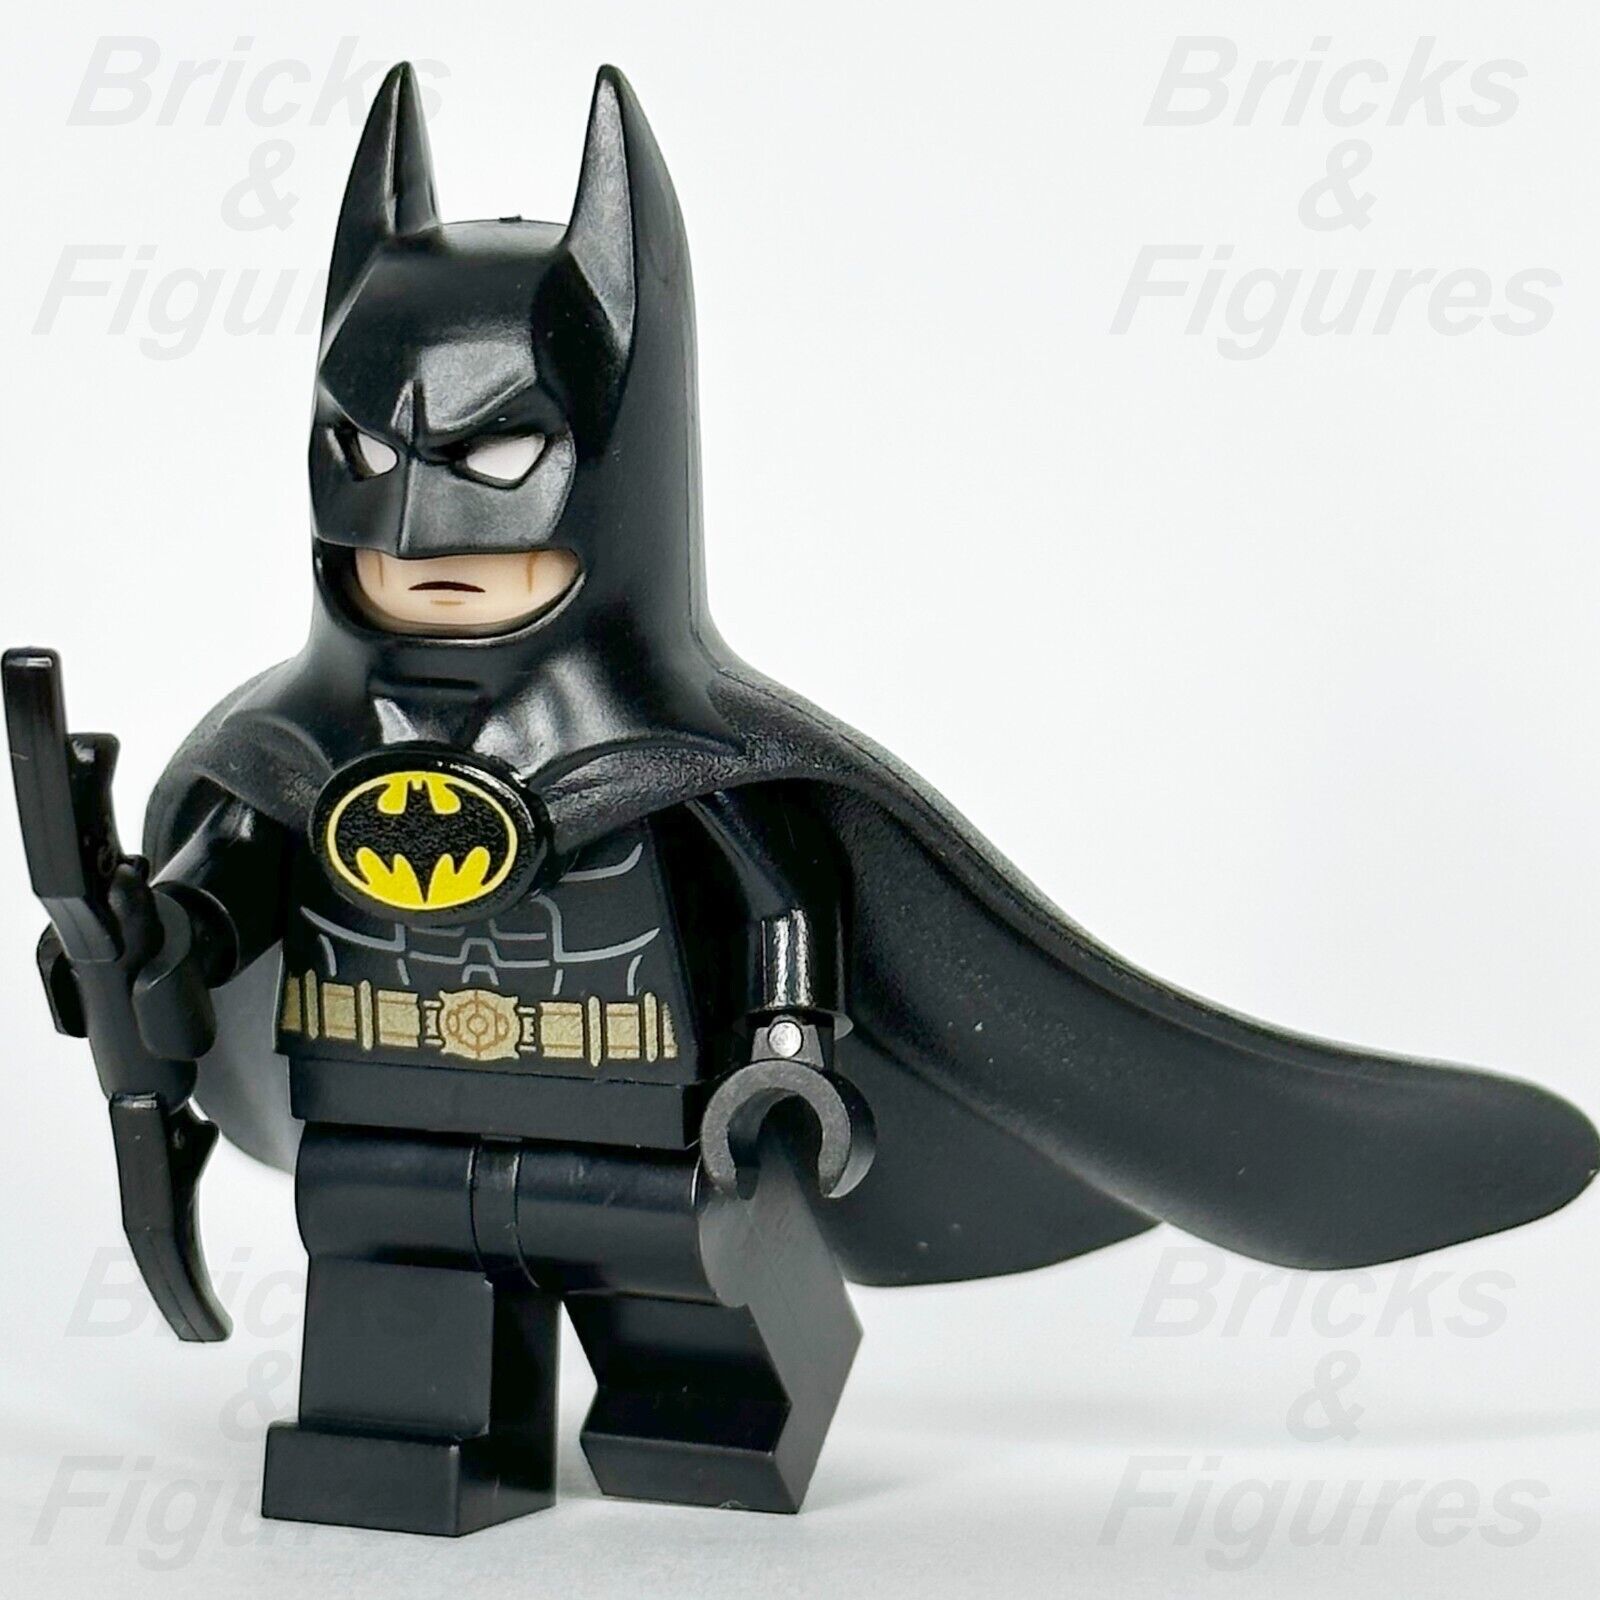 LEGO Super Heroes Batman 1992 Minifigure DC Tim Burton's Batman 30653 sh880 2